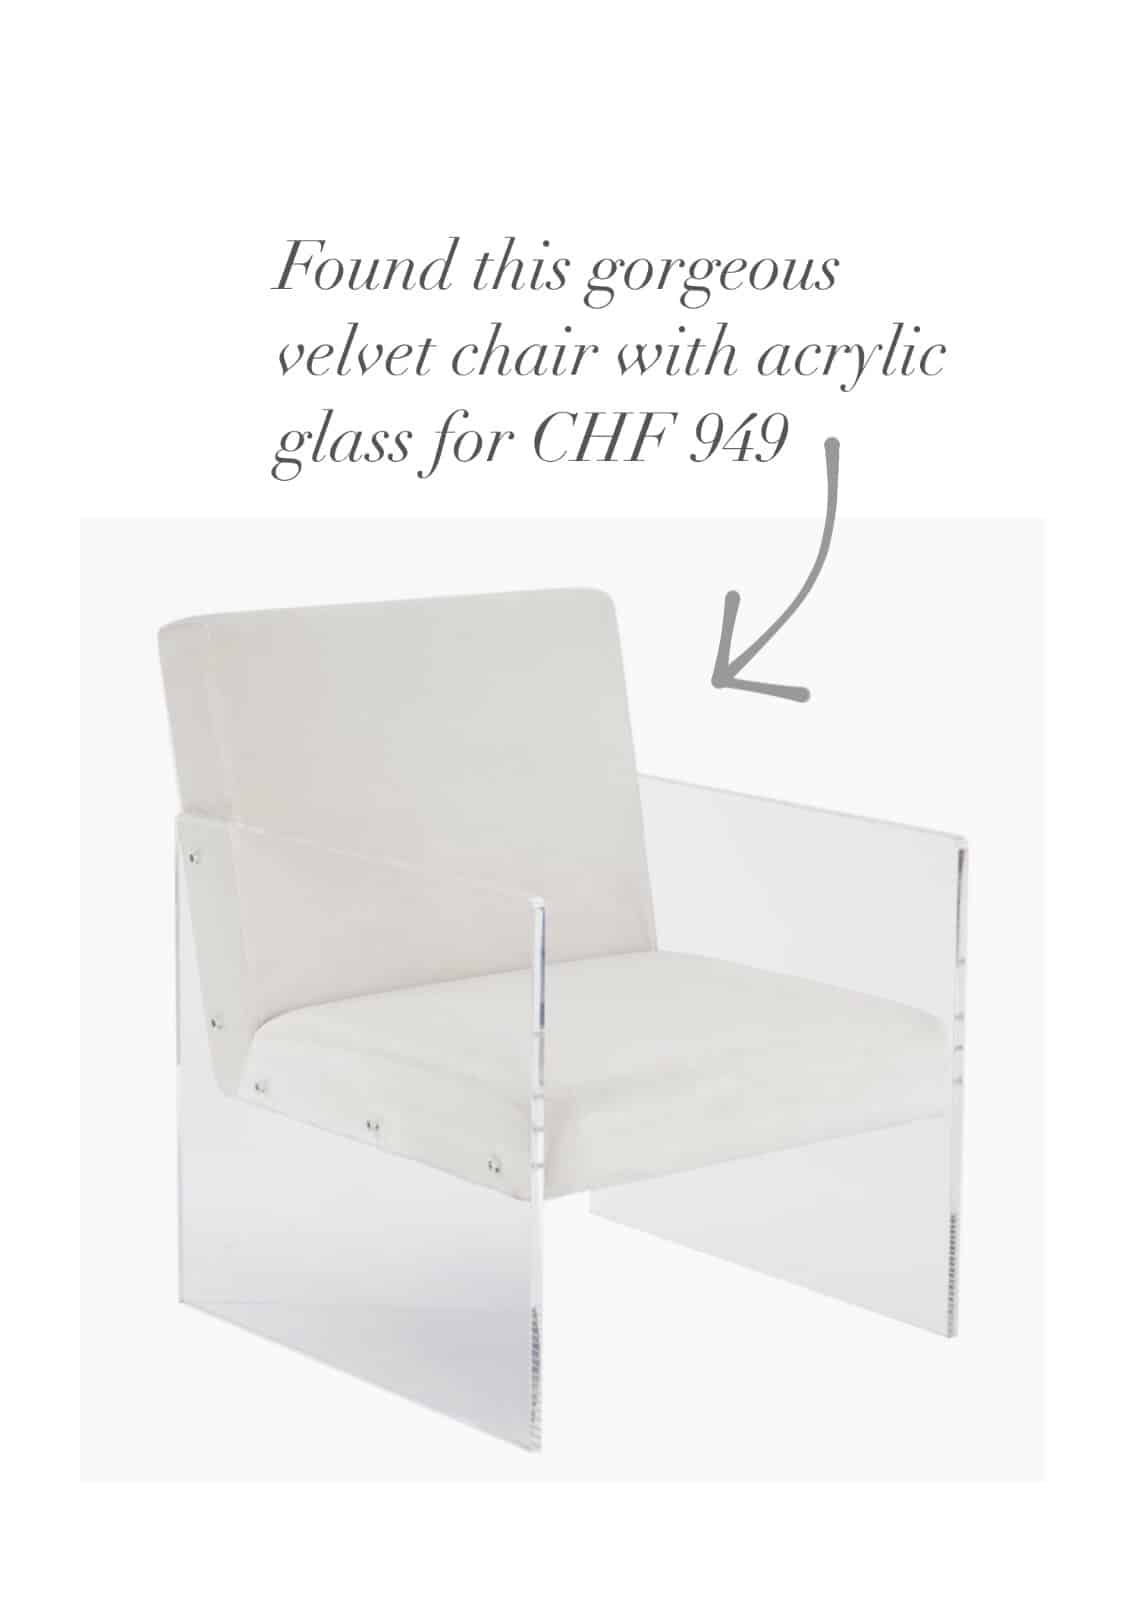 Recreate Acrylic Chair for CHF 949